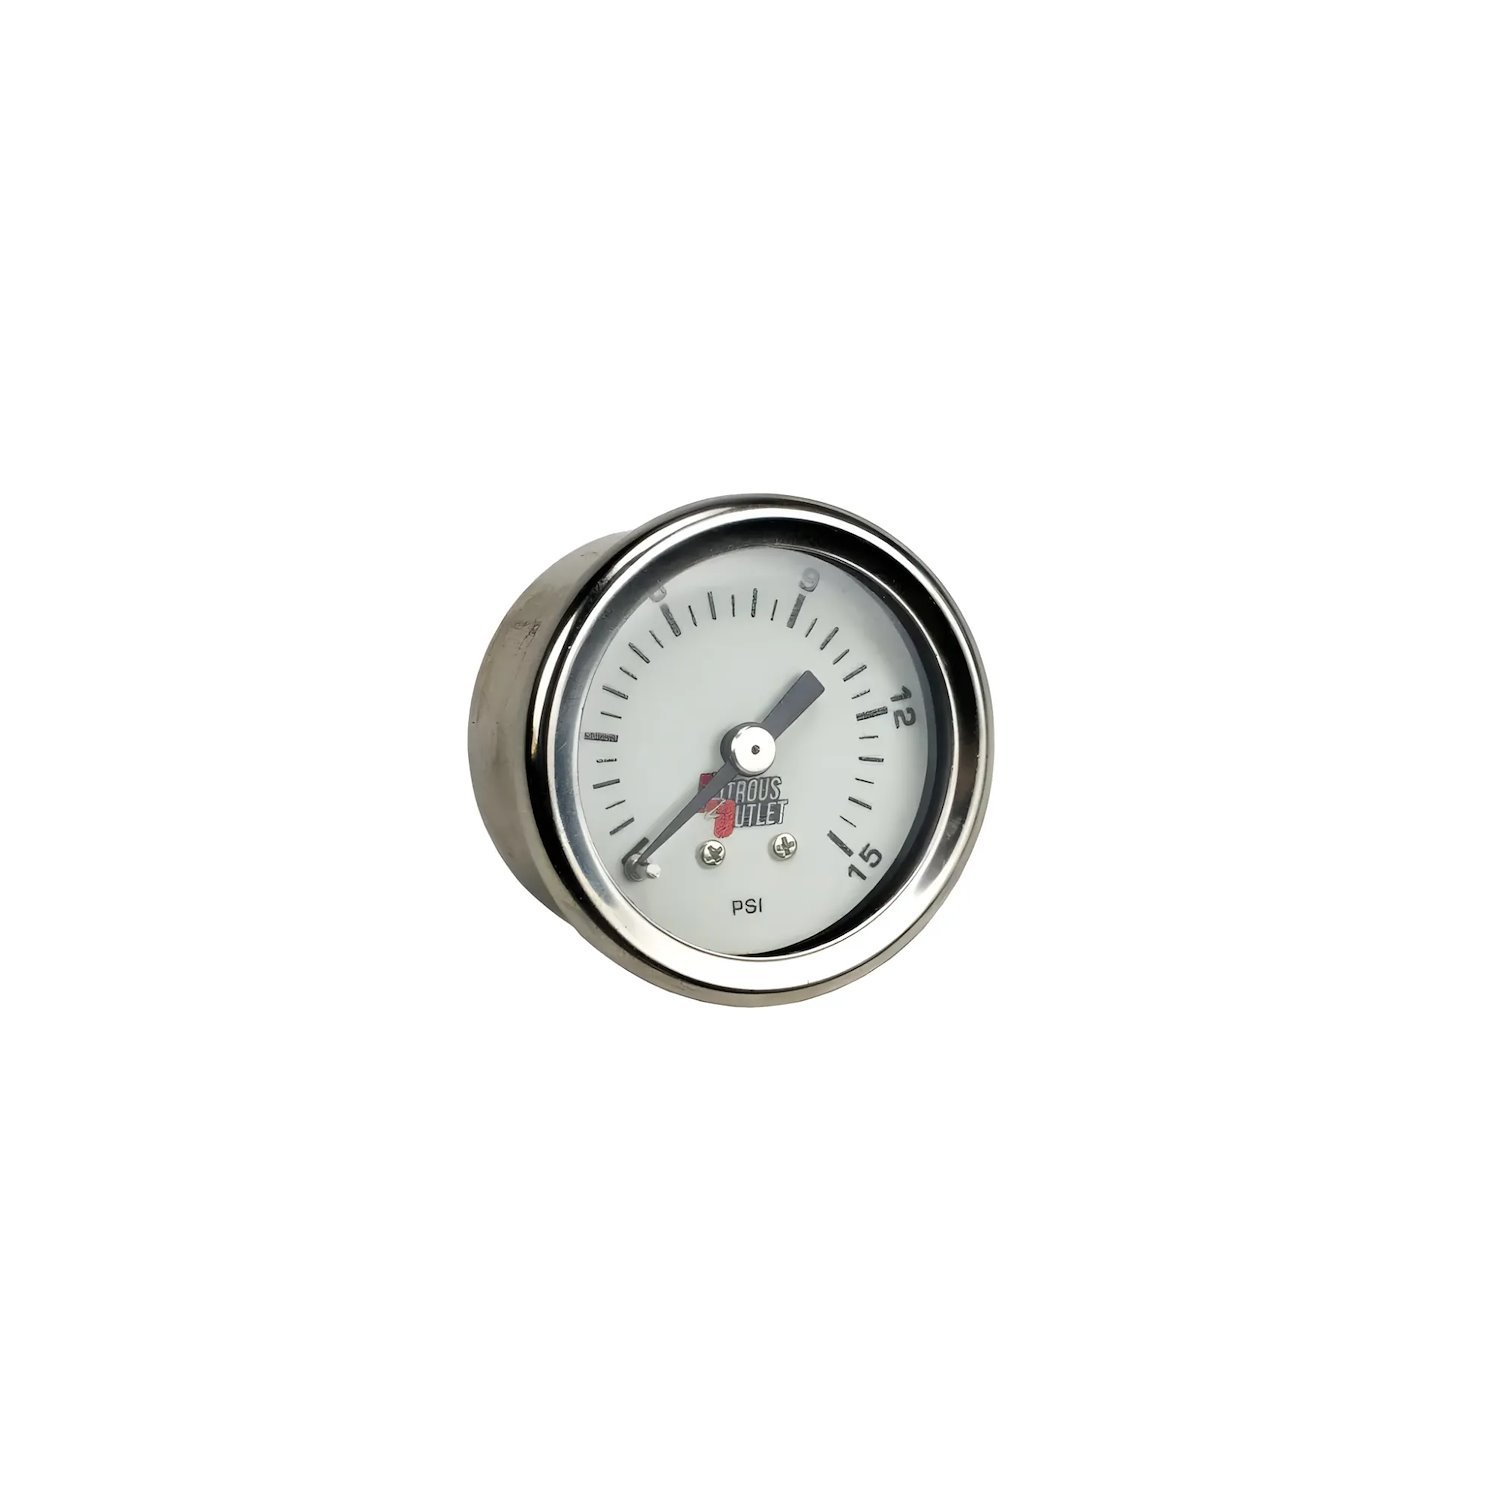 00-63003-4 Fuel Pressure Gauge, 4AN Manifold, 0-15 psi